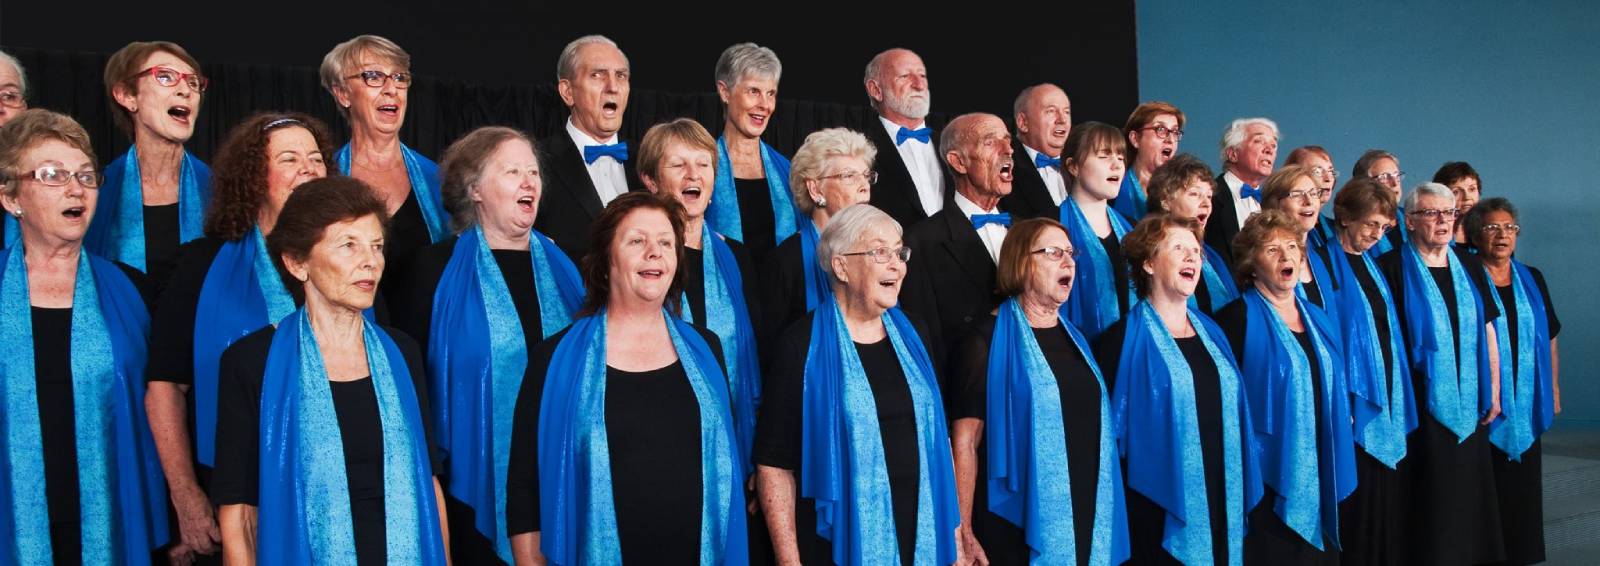 the sunshine coast choir performing in dress